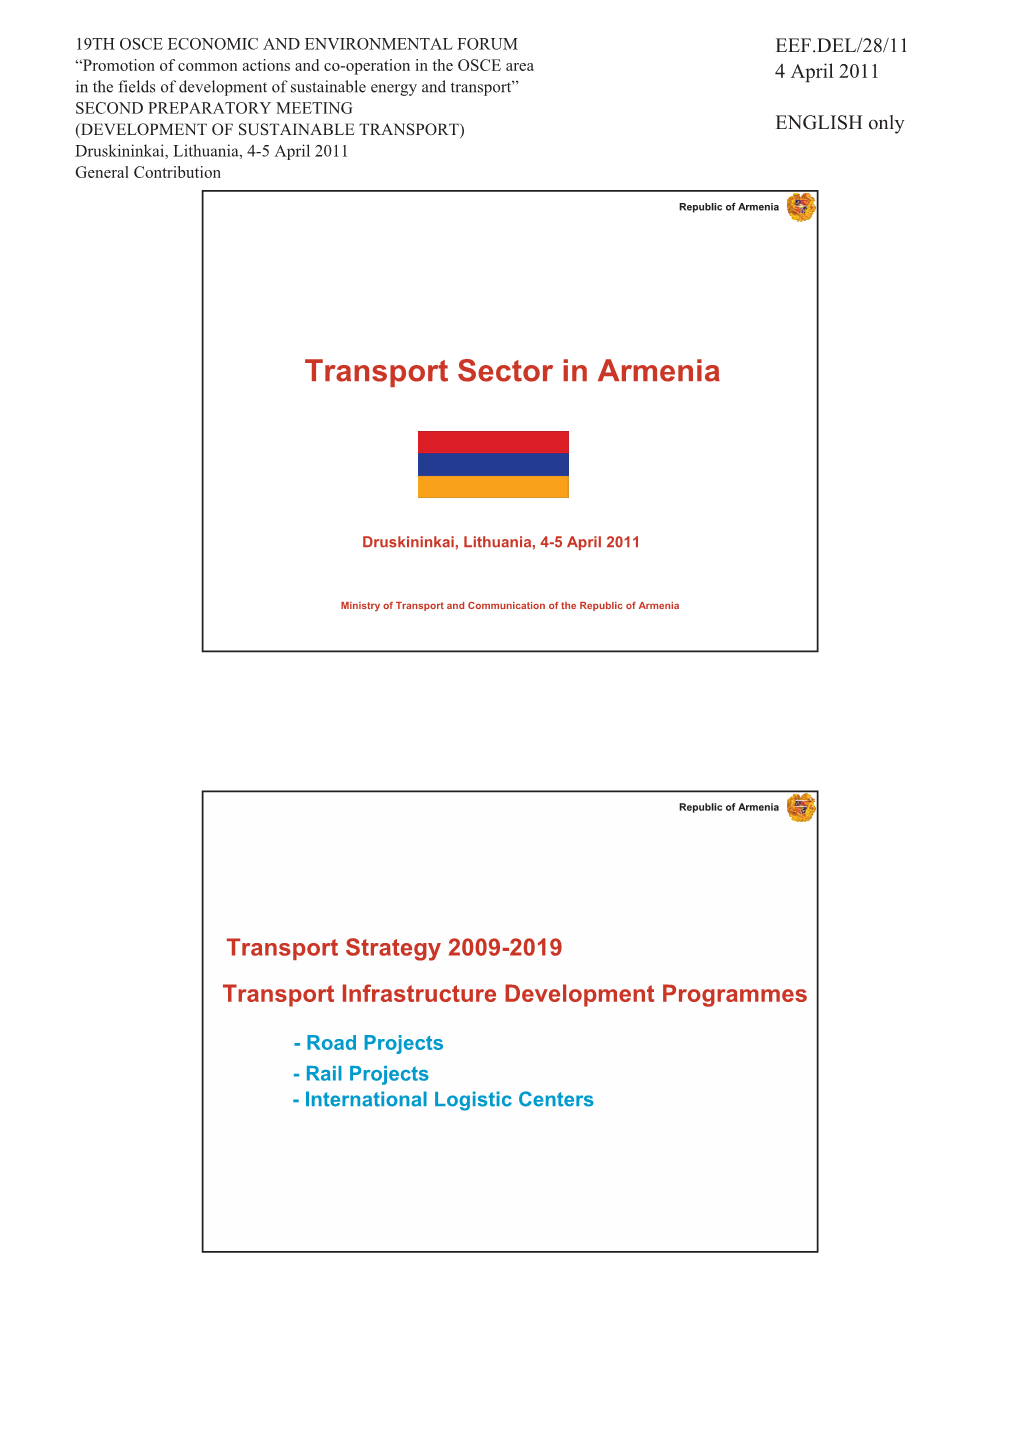 Transport Sector in Armenia